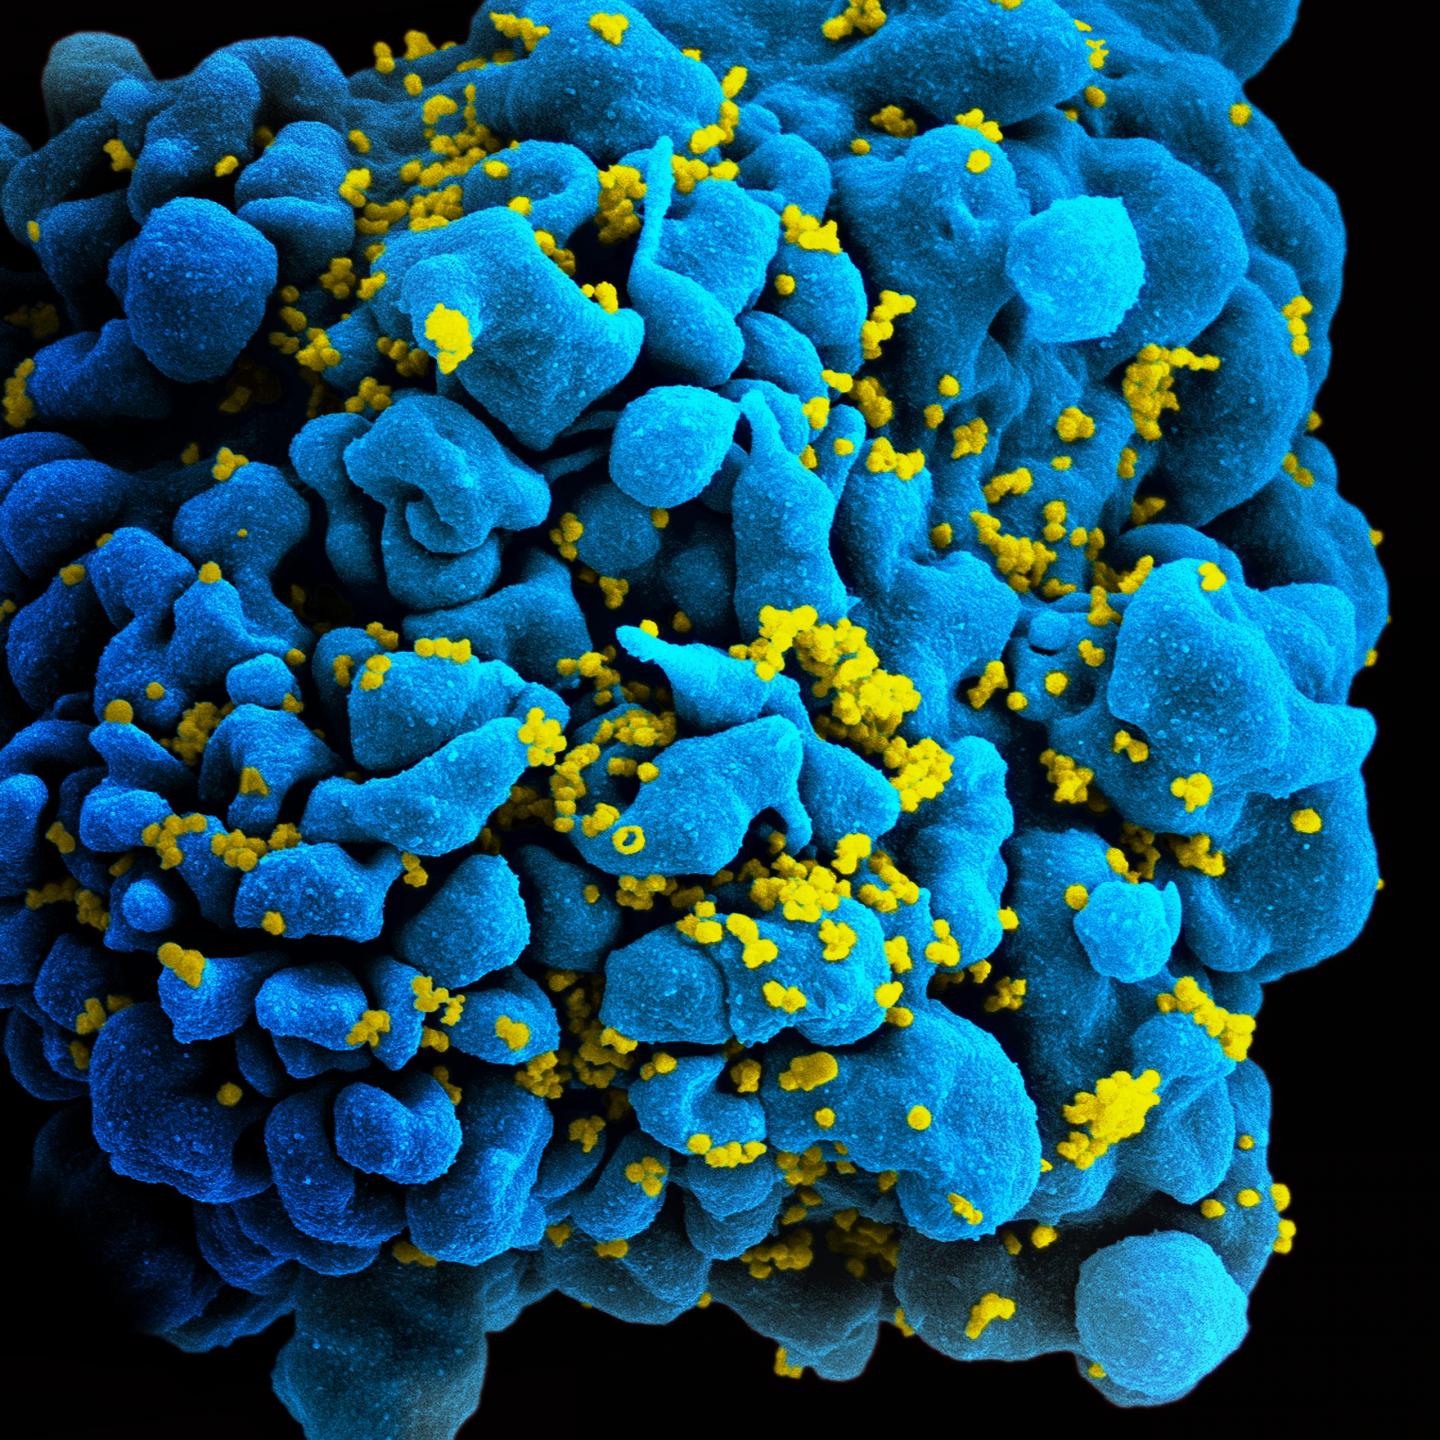 Researchers "un-can" the HIV virus